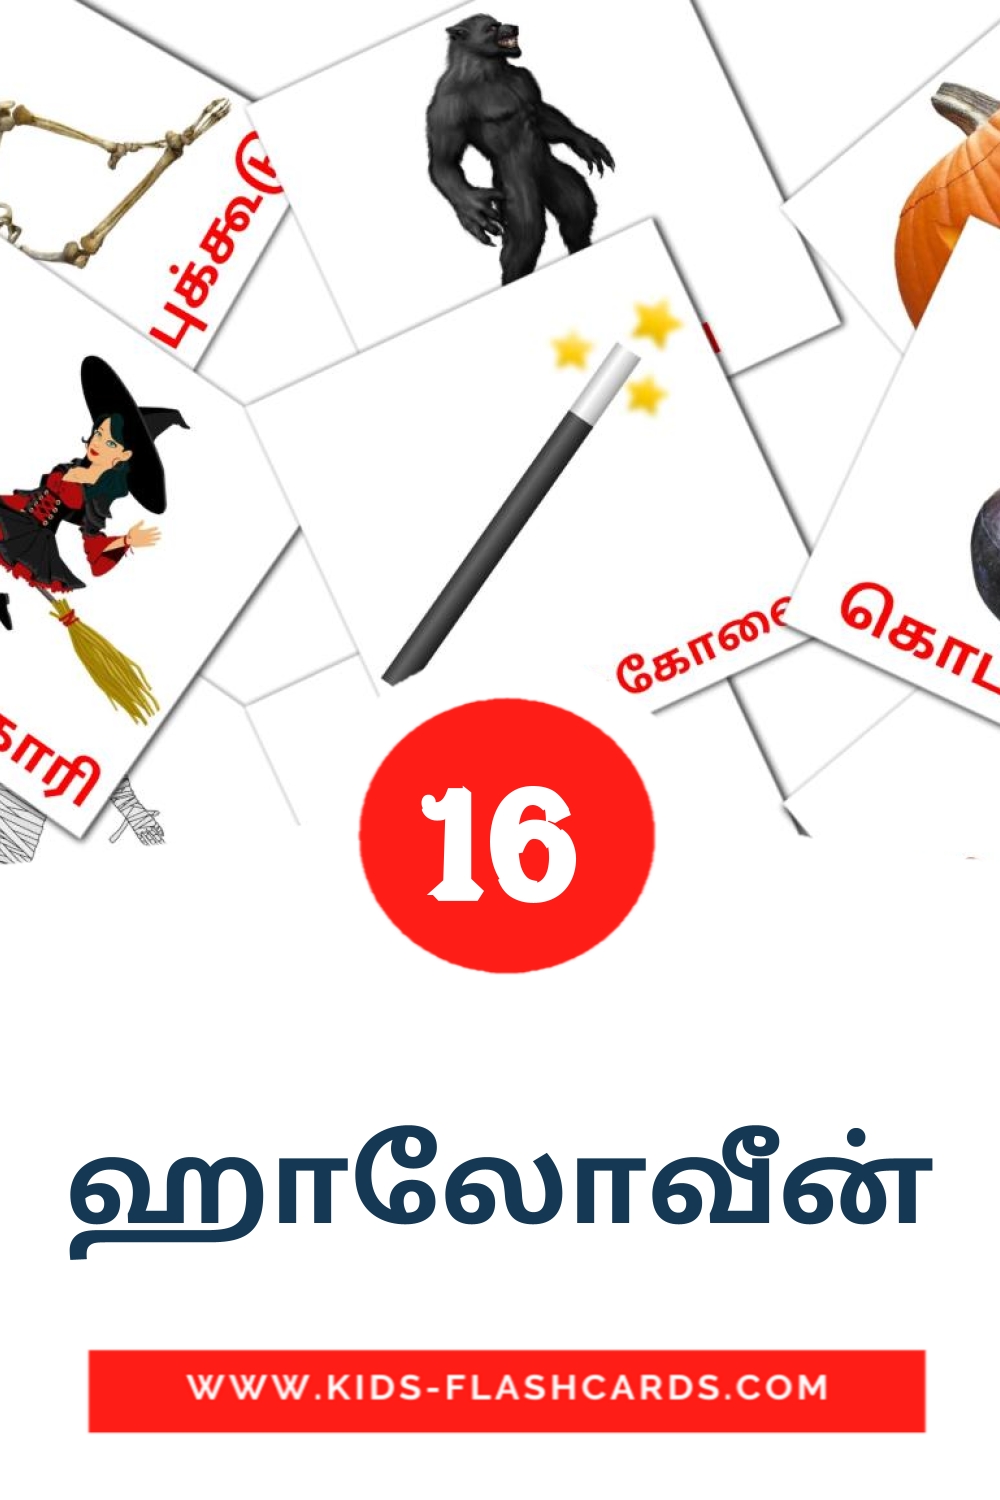 16 ஹாலோவீன் fotokaarten voor kleuters in het tamil